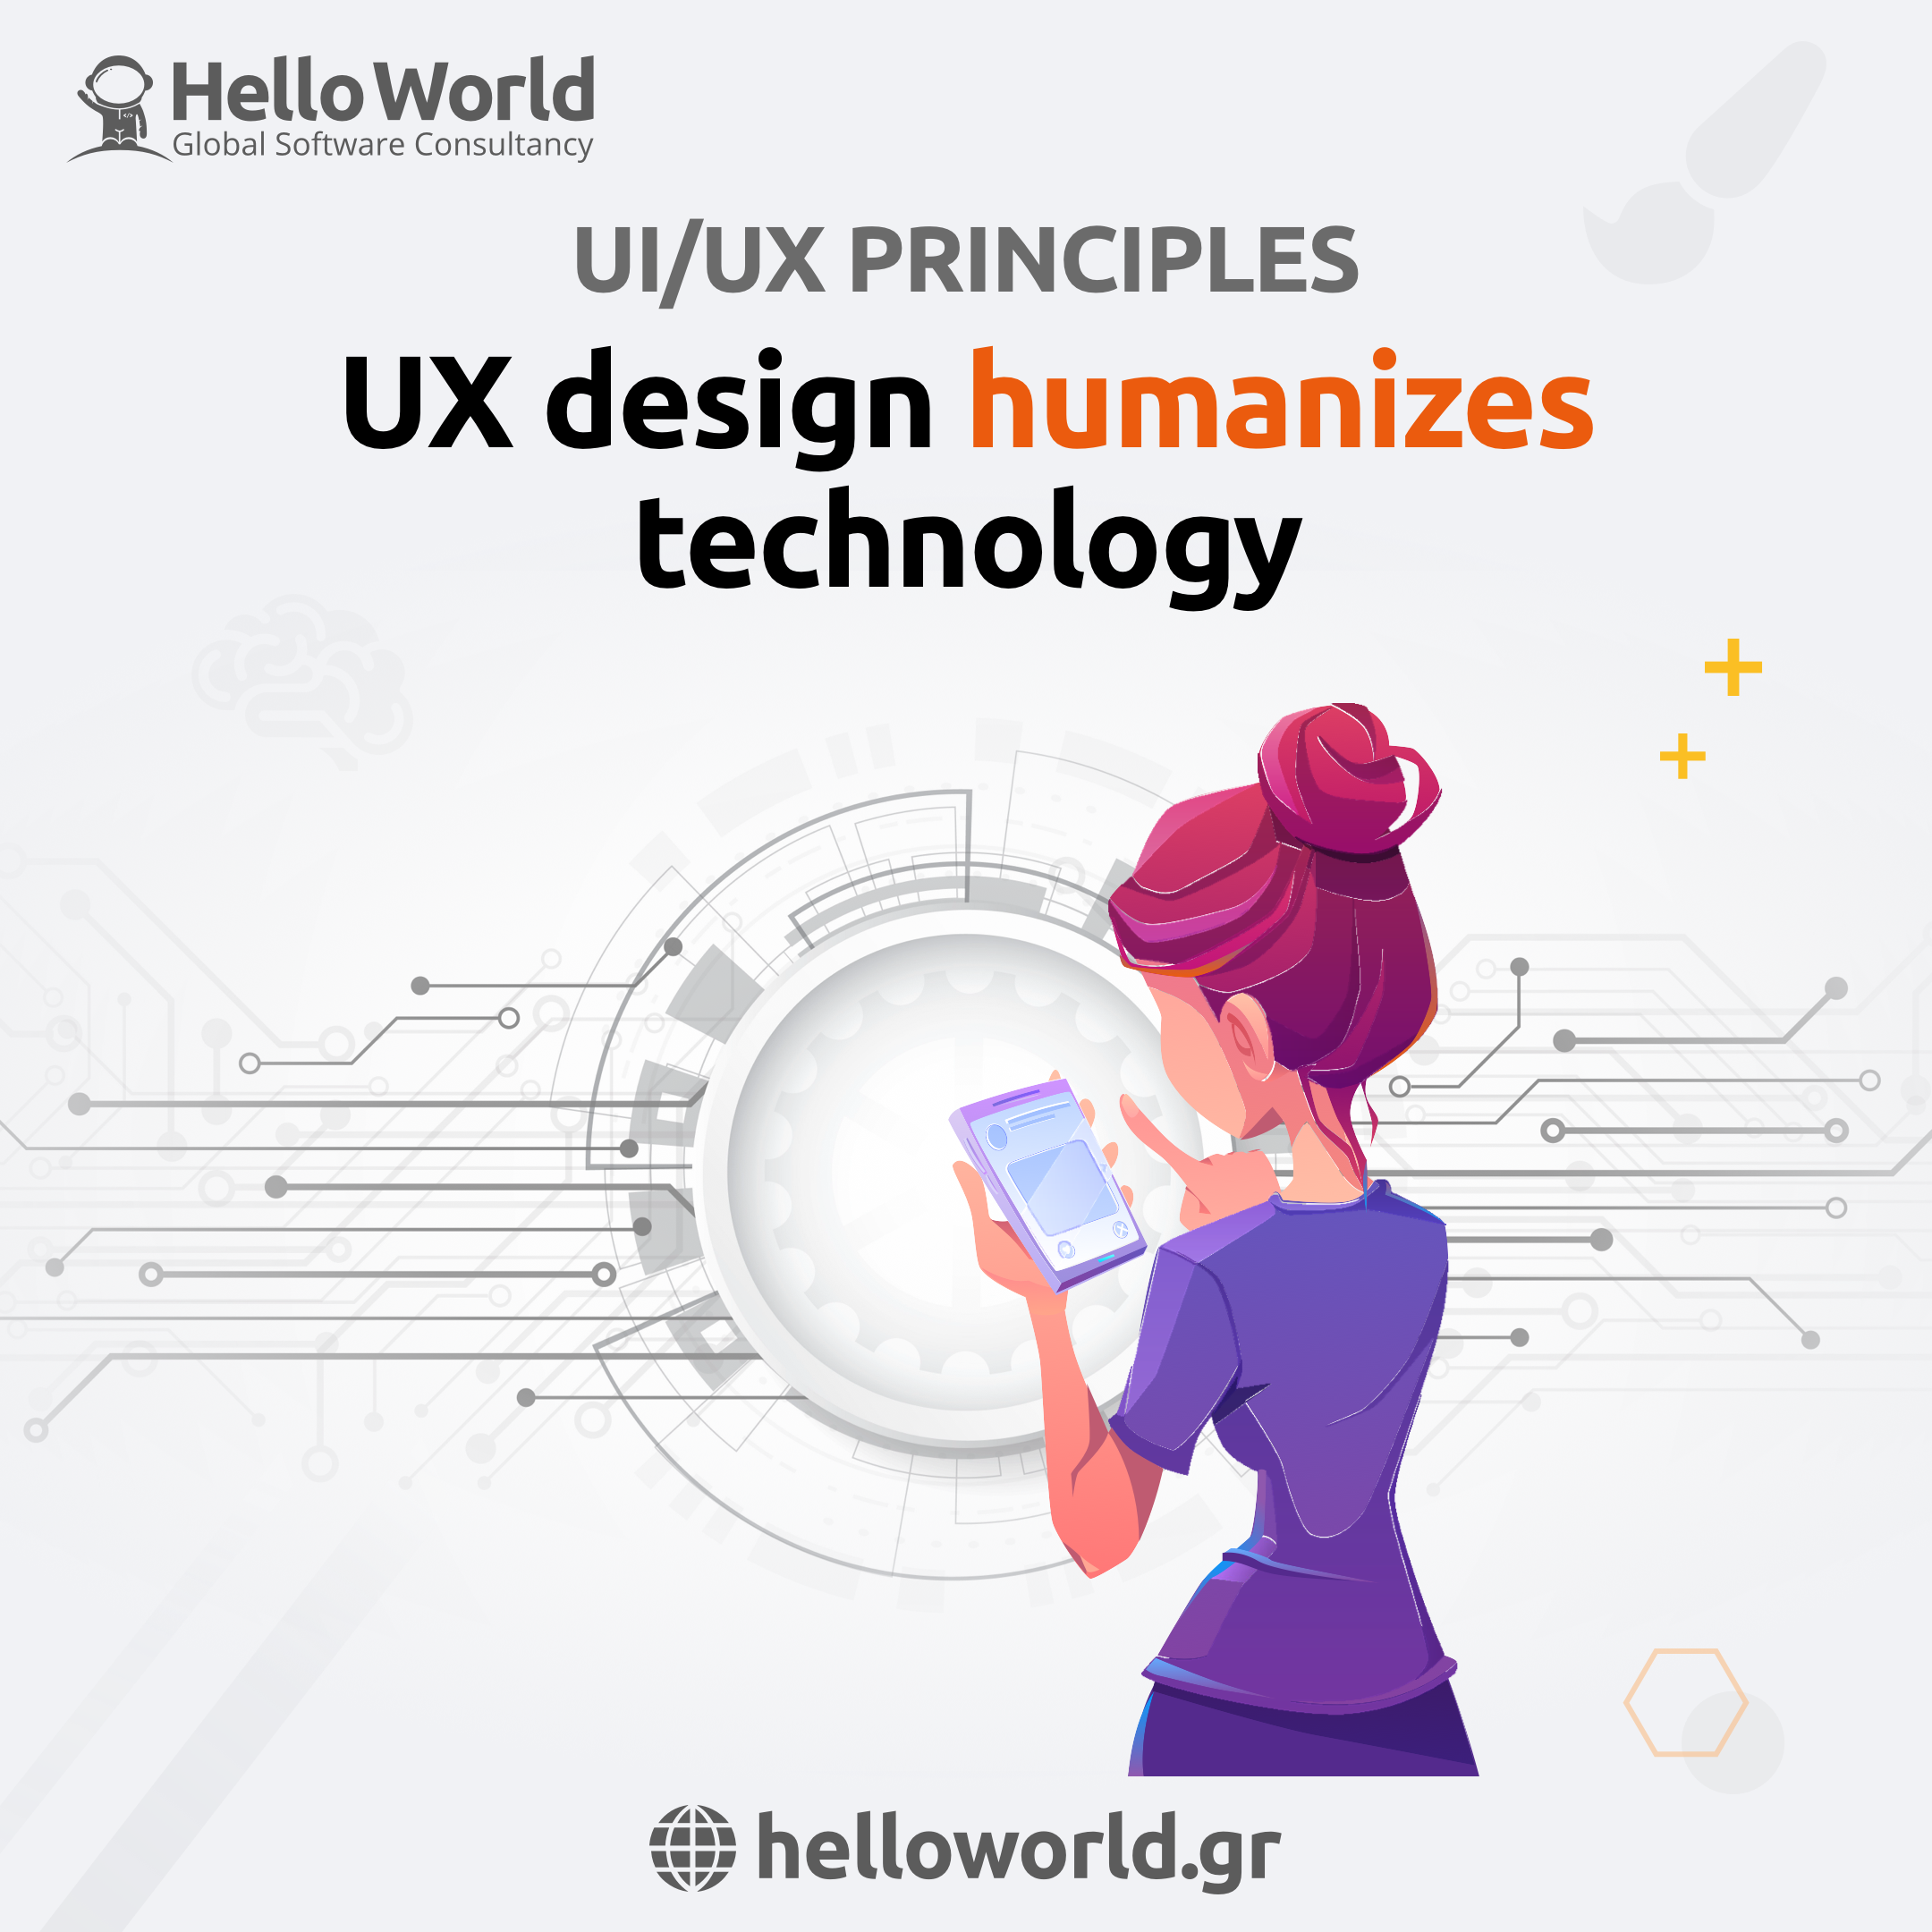 UX design humanizes technology